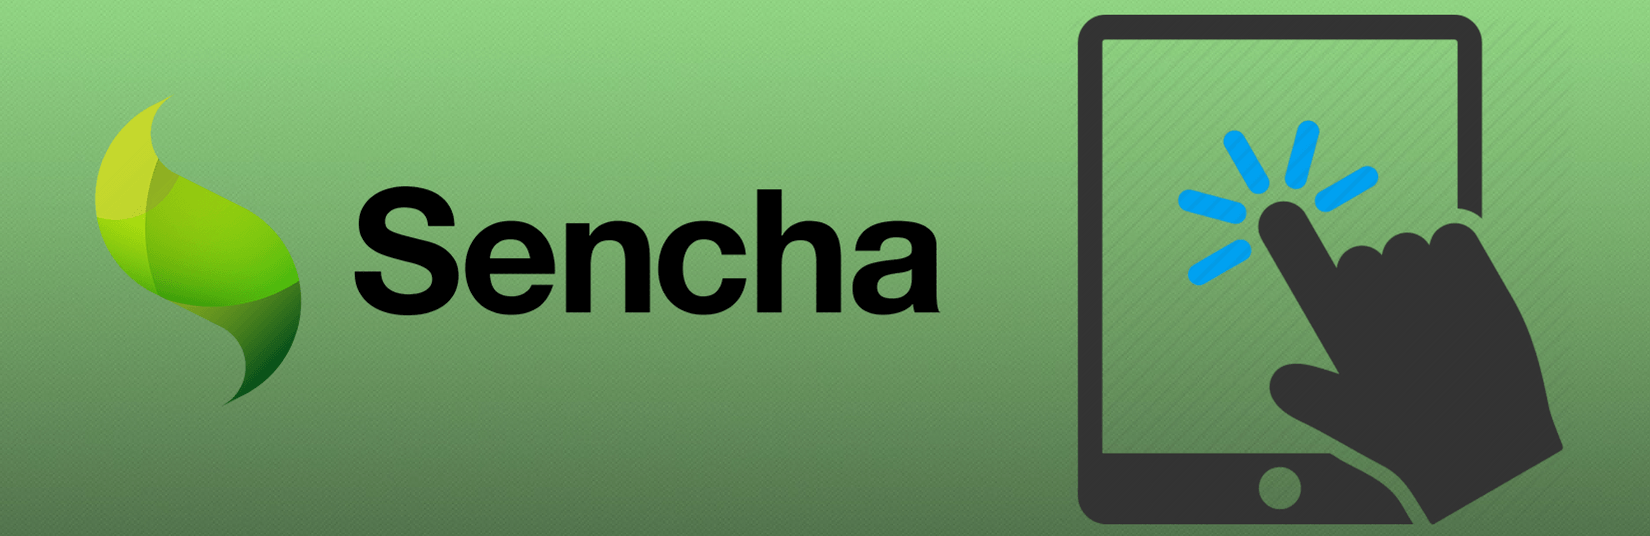 Sencha Logo - Sencha App Development. Sencha App build. Hire Sencha Developers